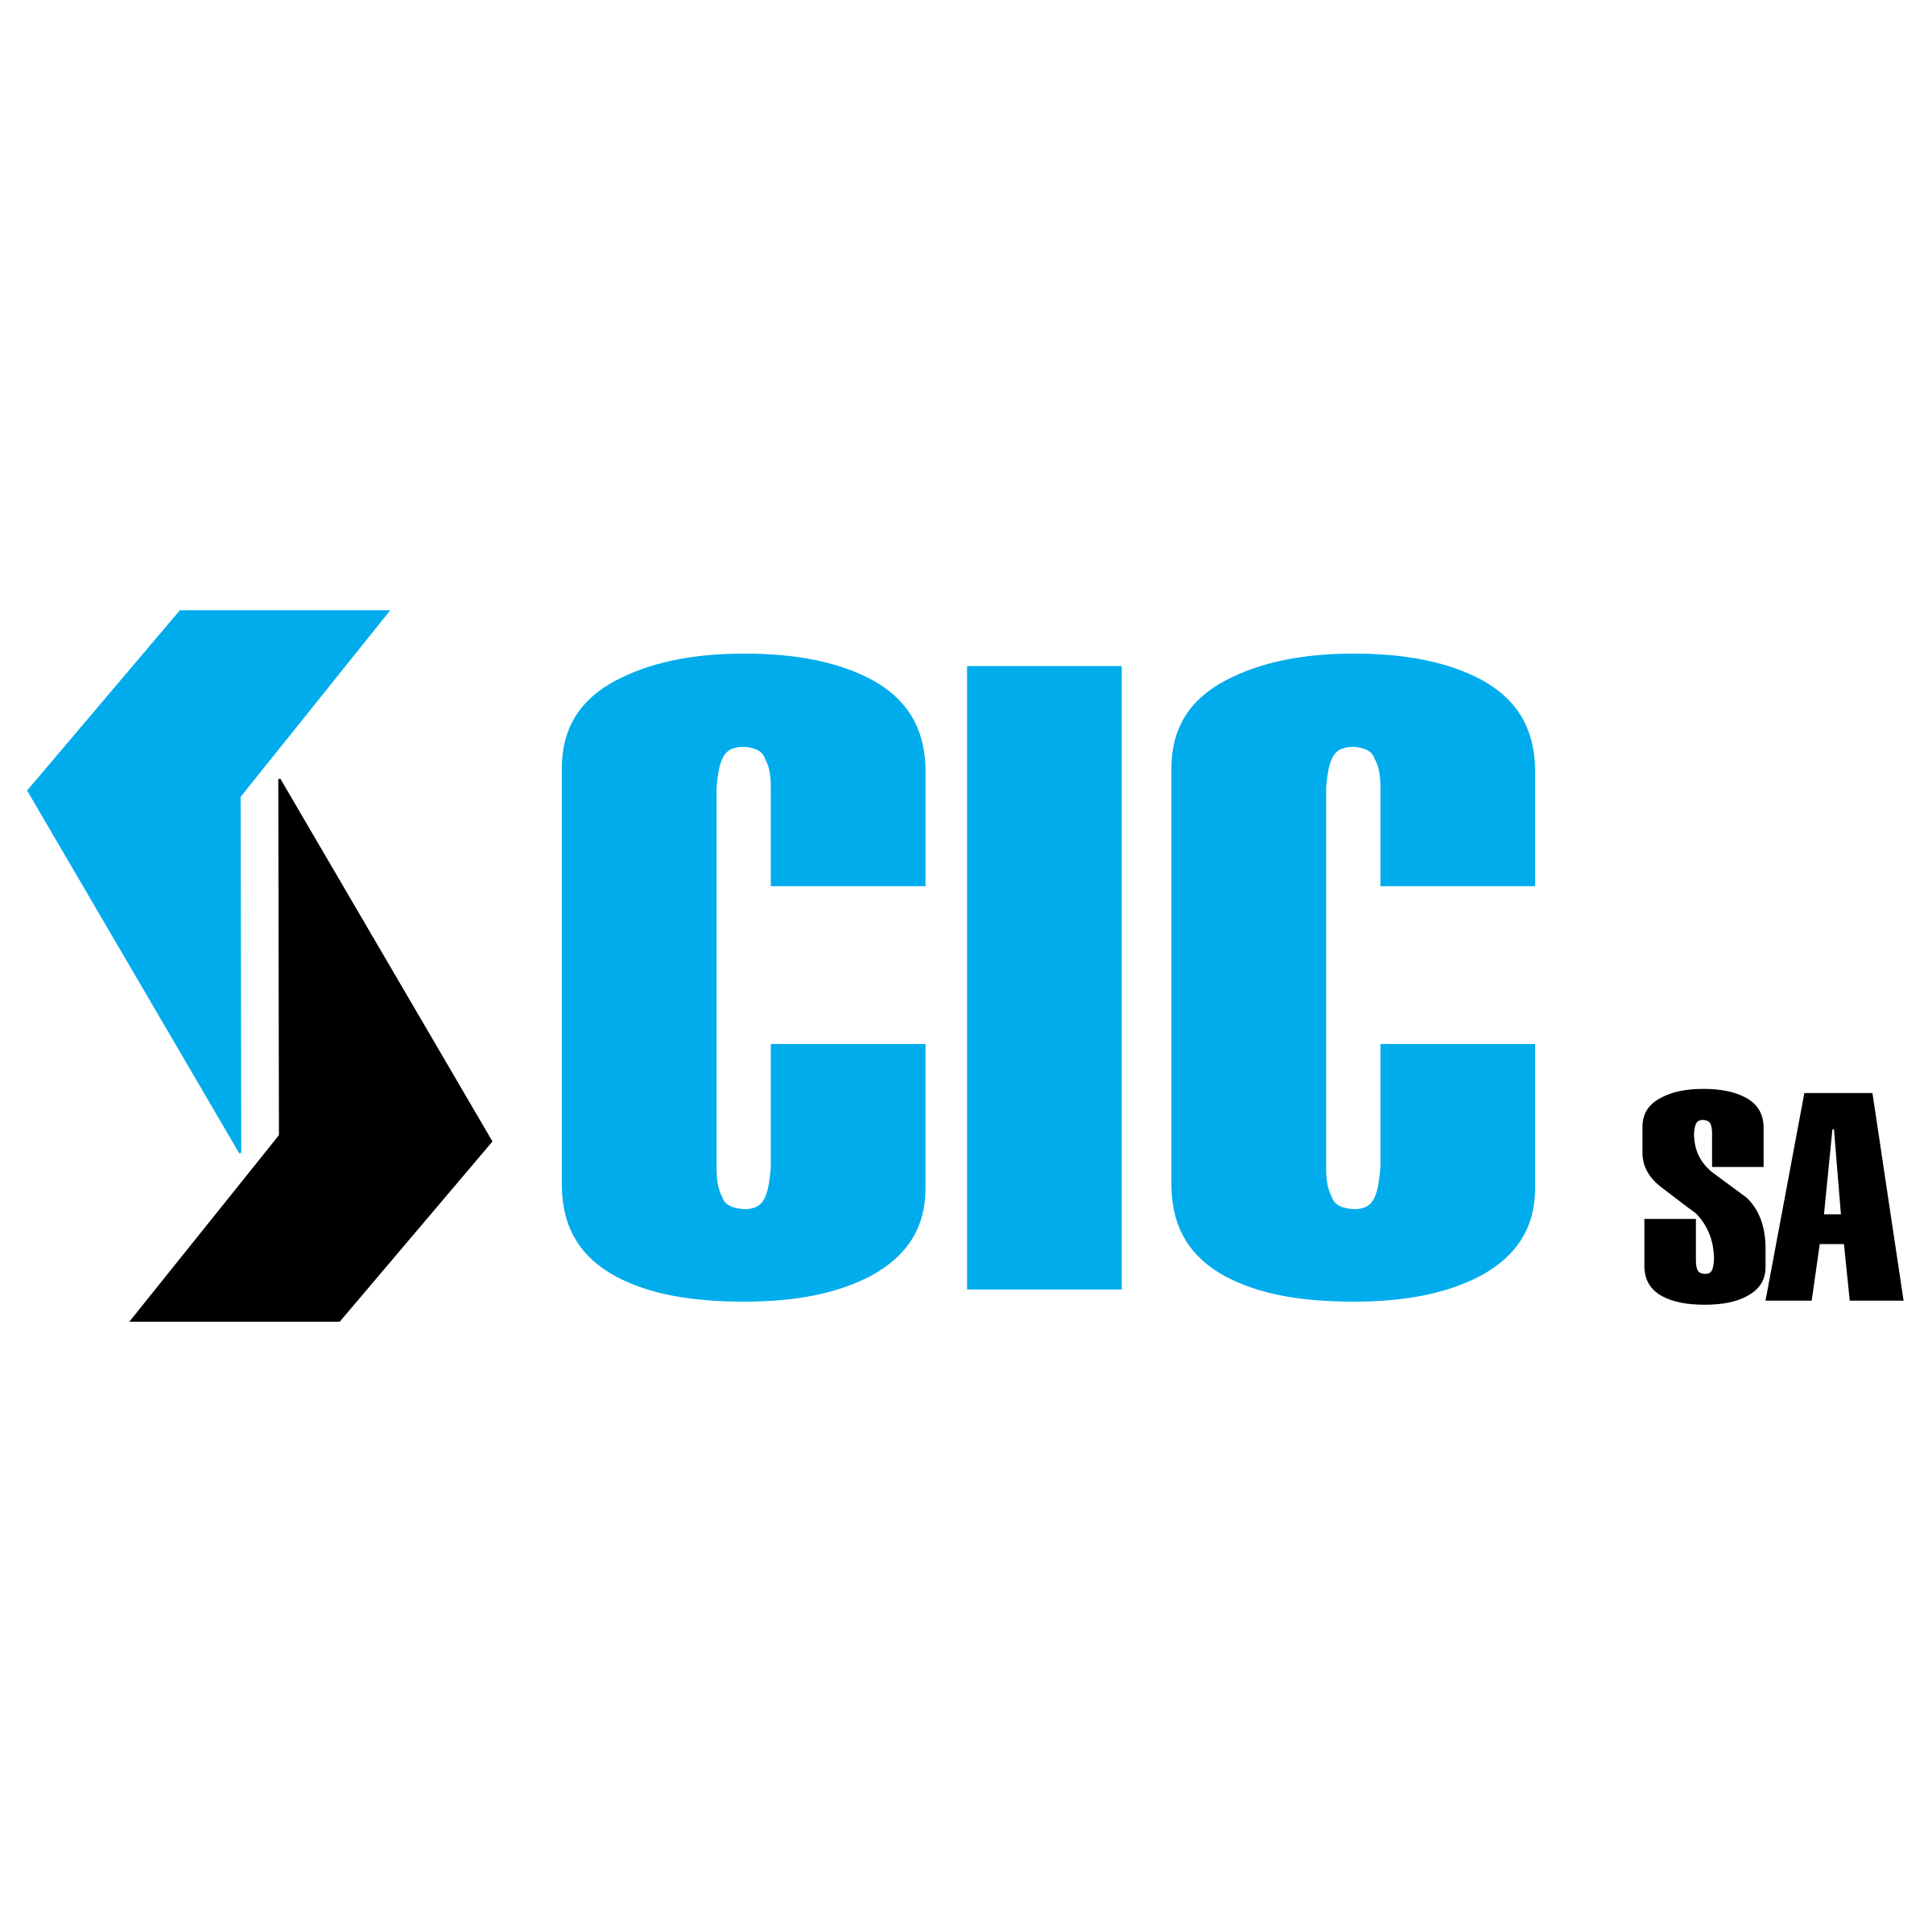 CIC Logo - CIC Logo PNG Transparent & SVG Vector - Freebie Supply